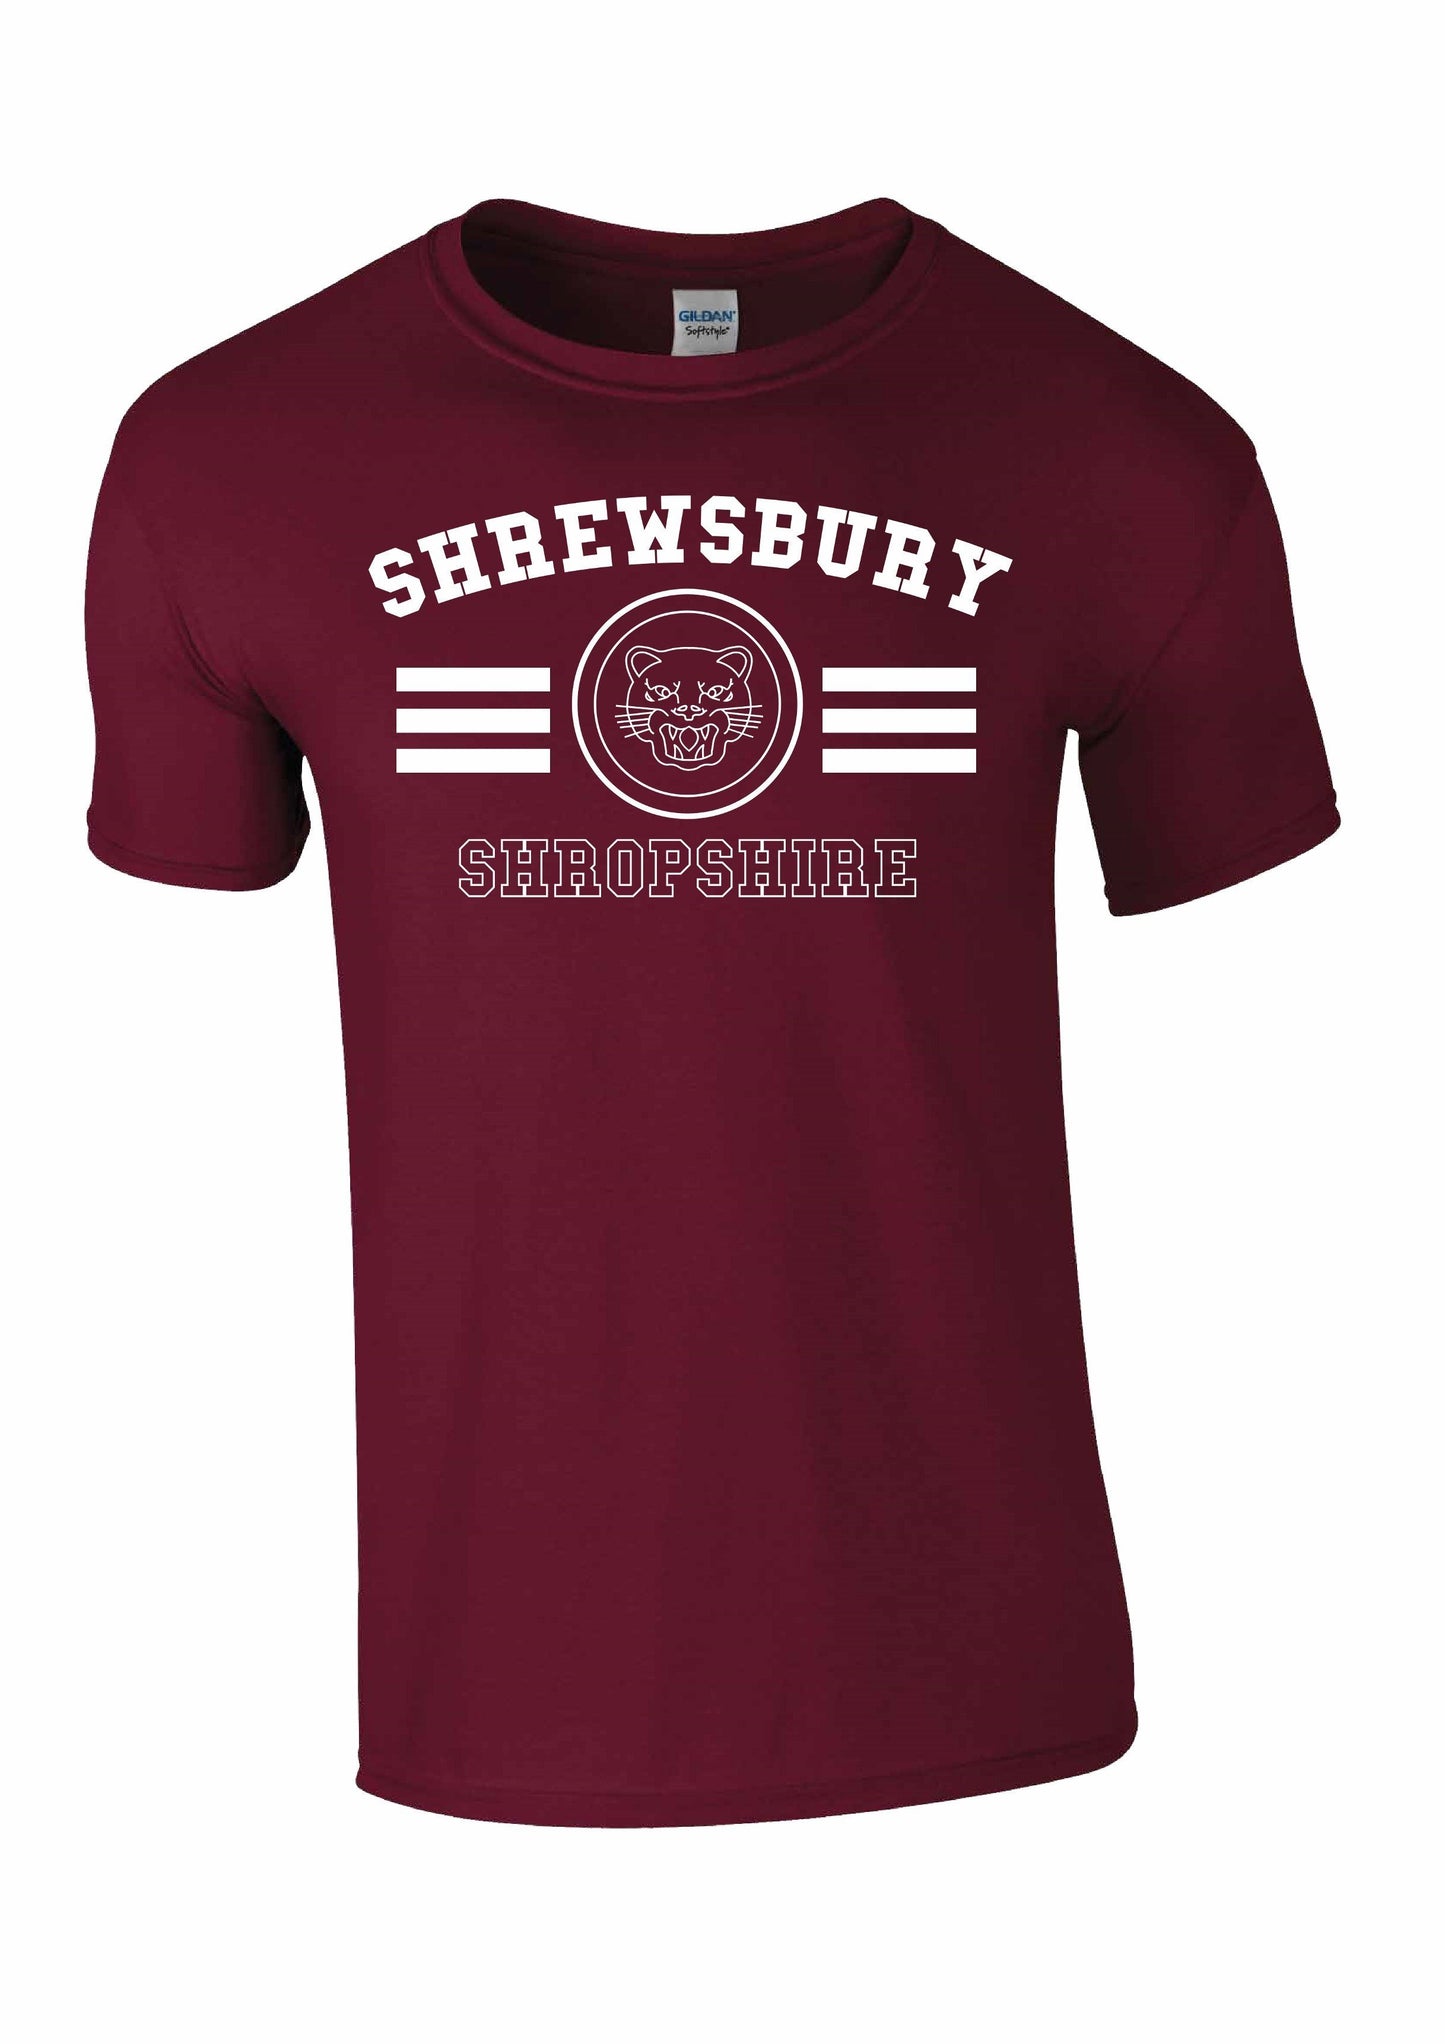 Shrewsbury Tiger Kids T-shirt - Burgundy - 9/10 yrs